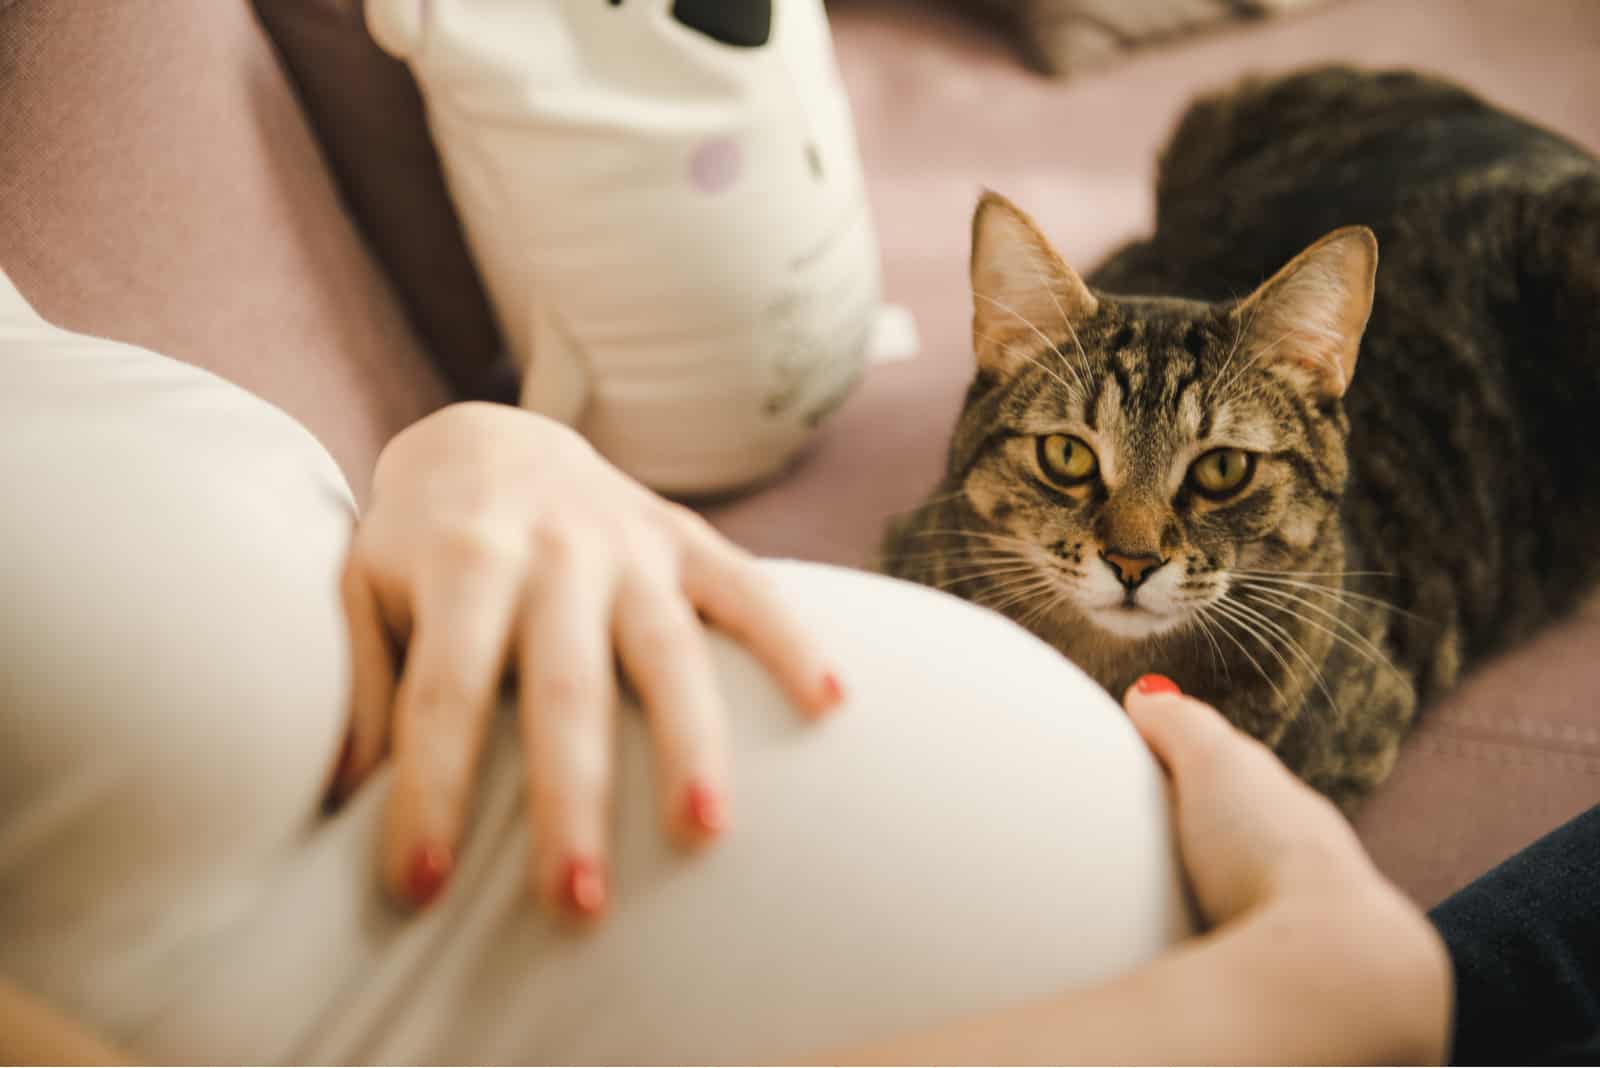 cat looking at Pregnant woman